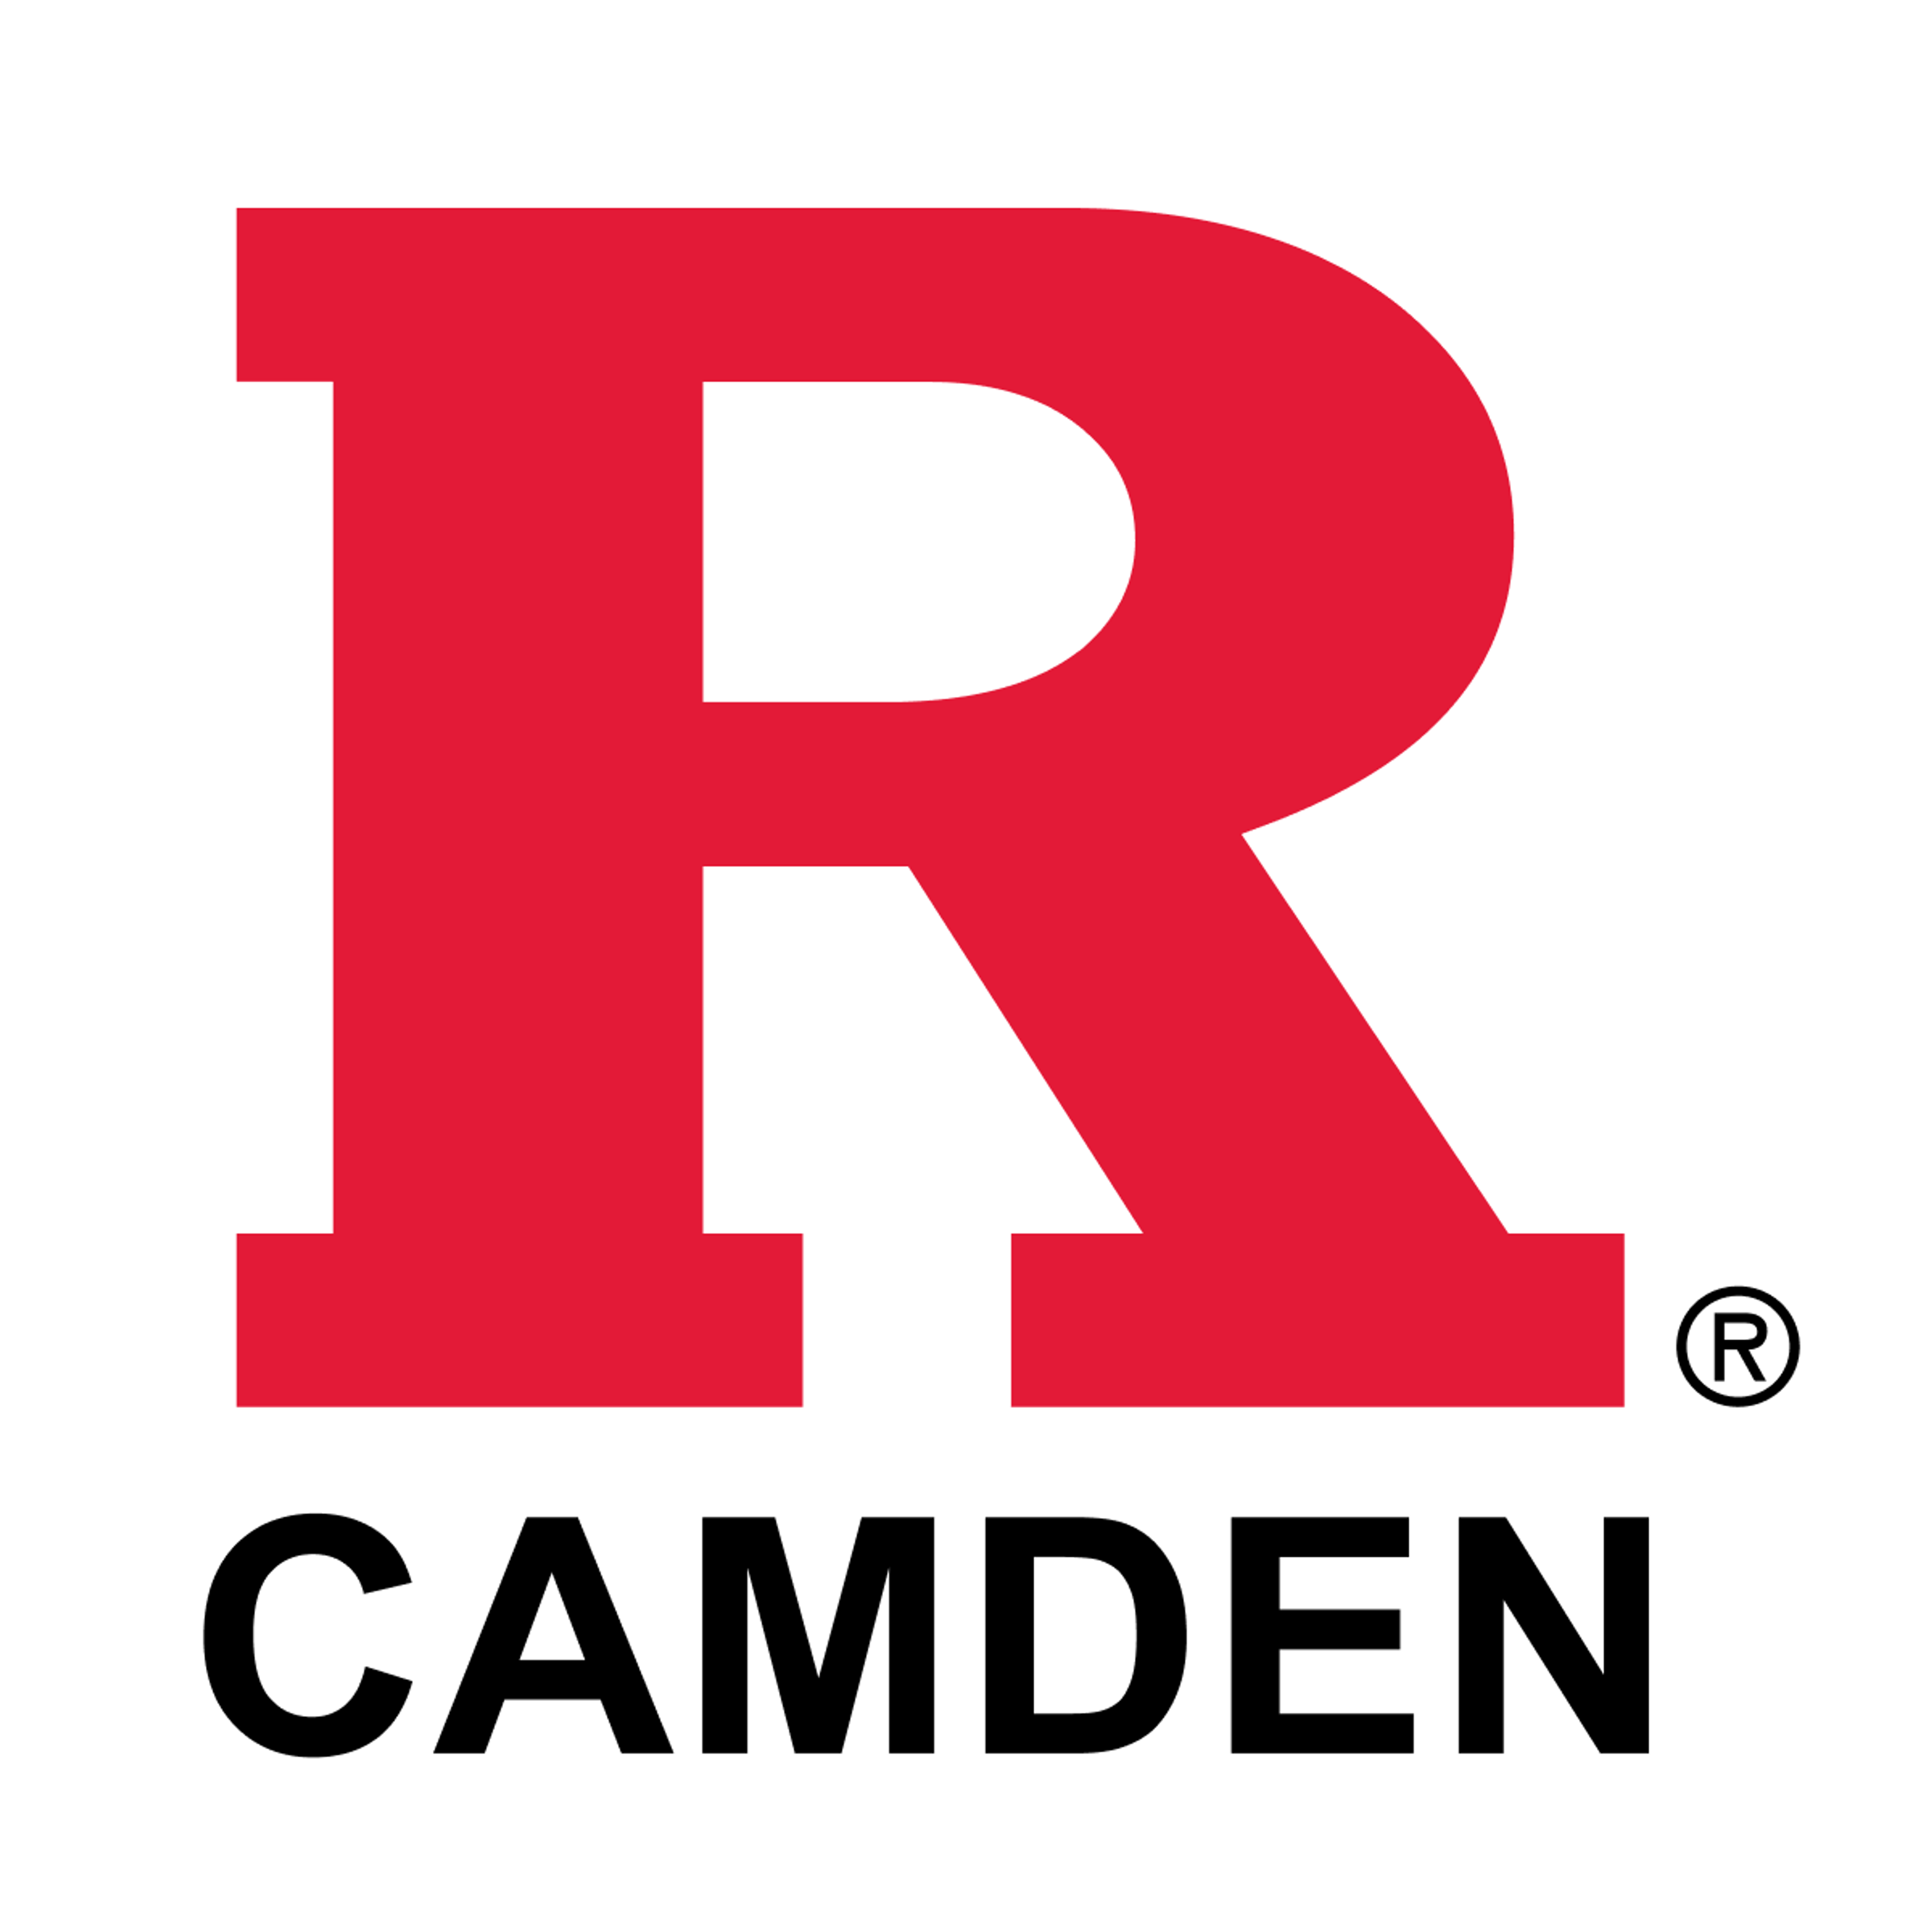 Rutgers University-Camden logo